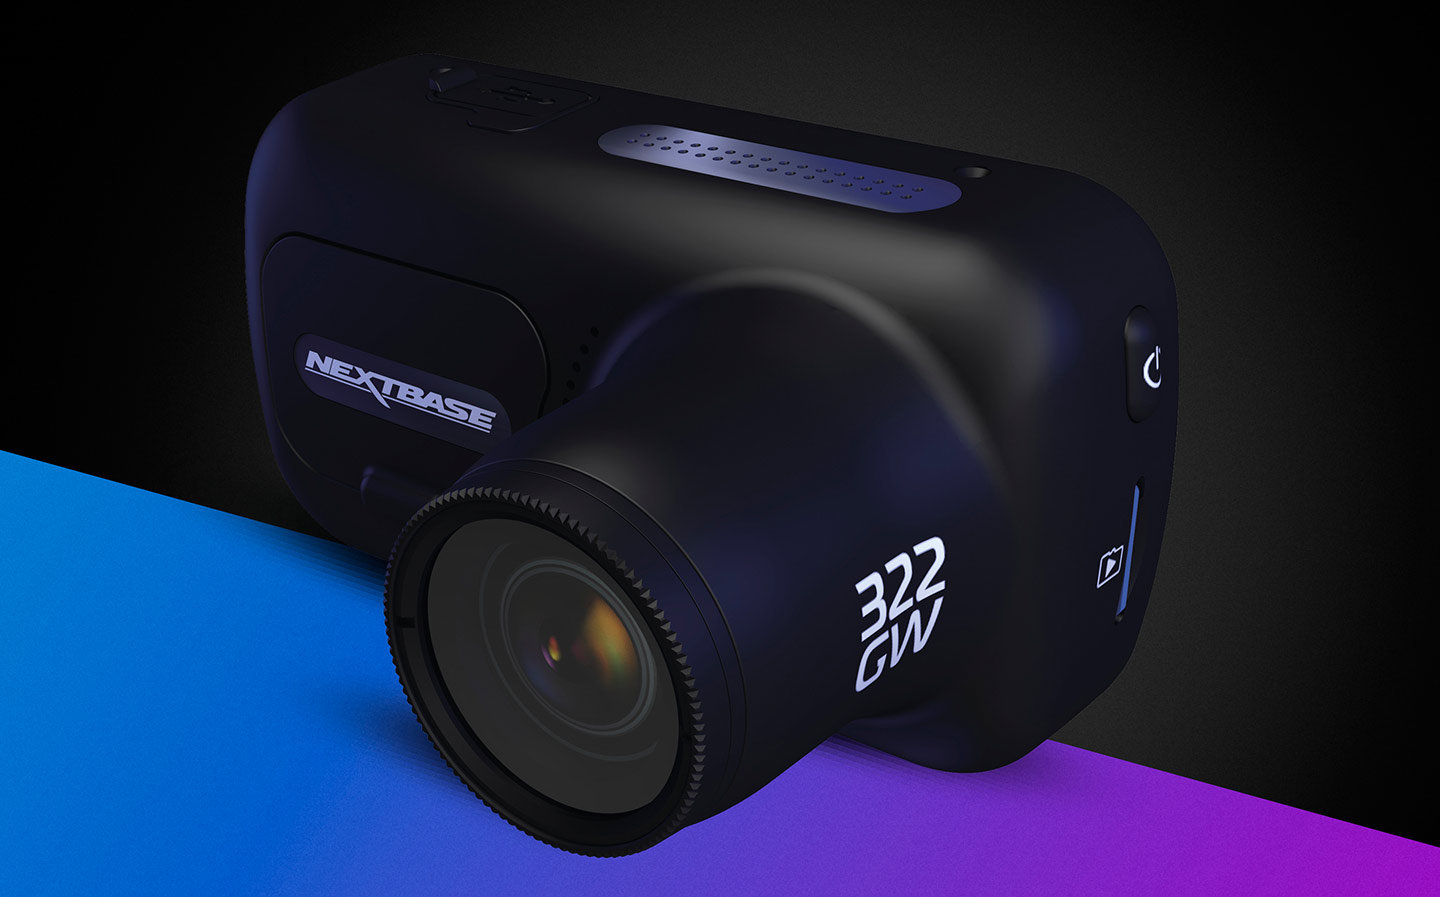 Nextbase Series 2 dash cams get Alexa, can summon emergency services after a crash